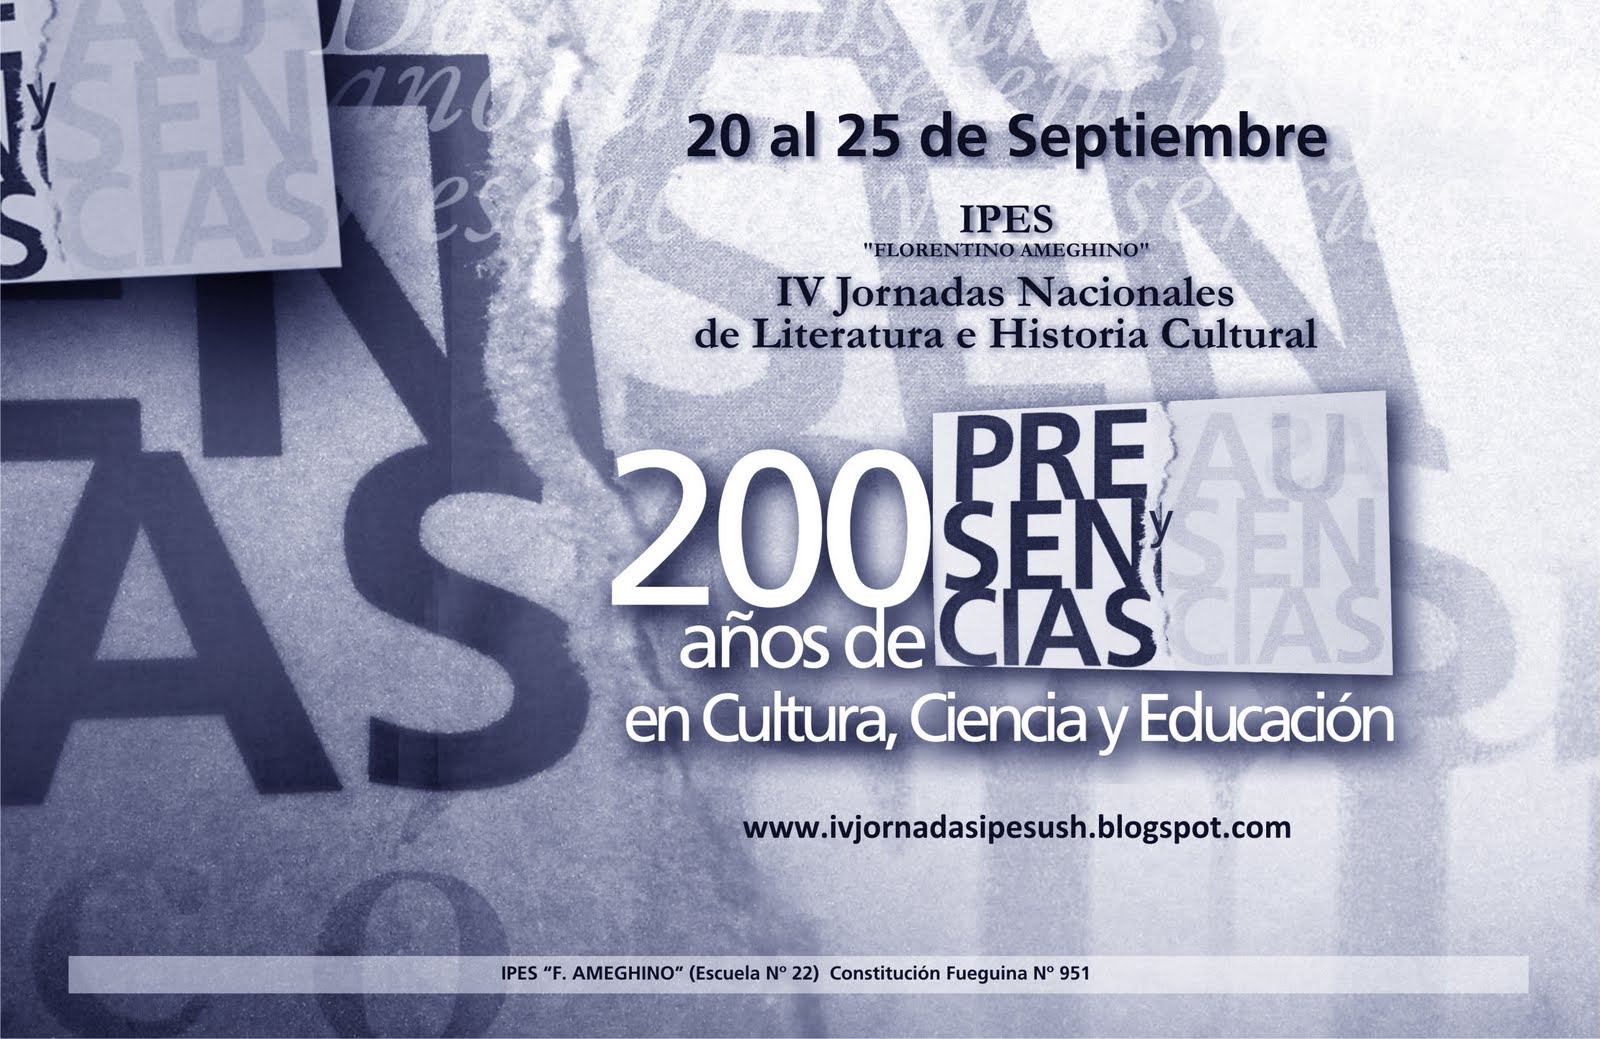 IPES "FLORENTINO AMEGHINO" IV Jornadas Nacionales de Literatura e Historia Cultural